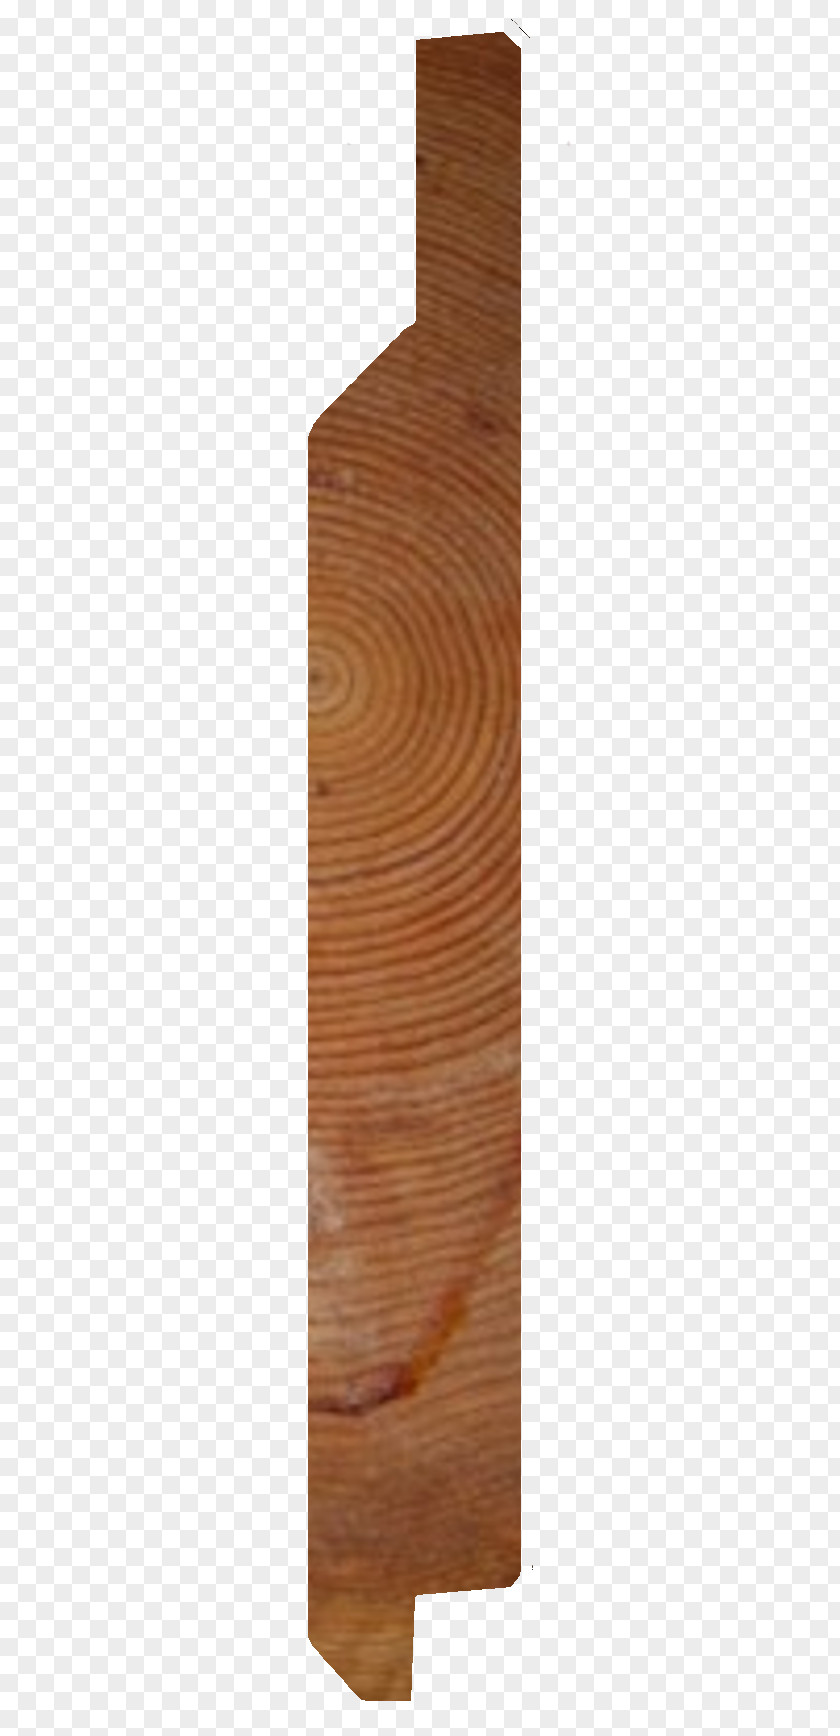 White Wood Plank Hardwood Siding Shiplap Plywood Lumber PNG